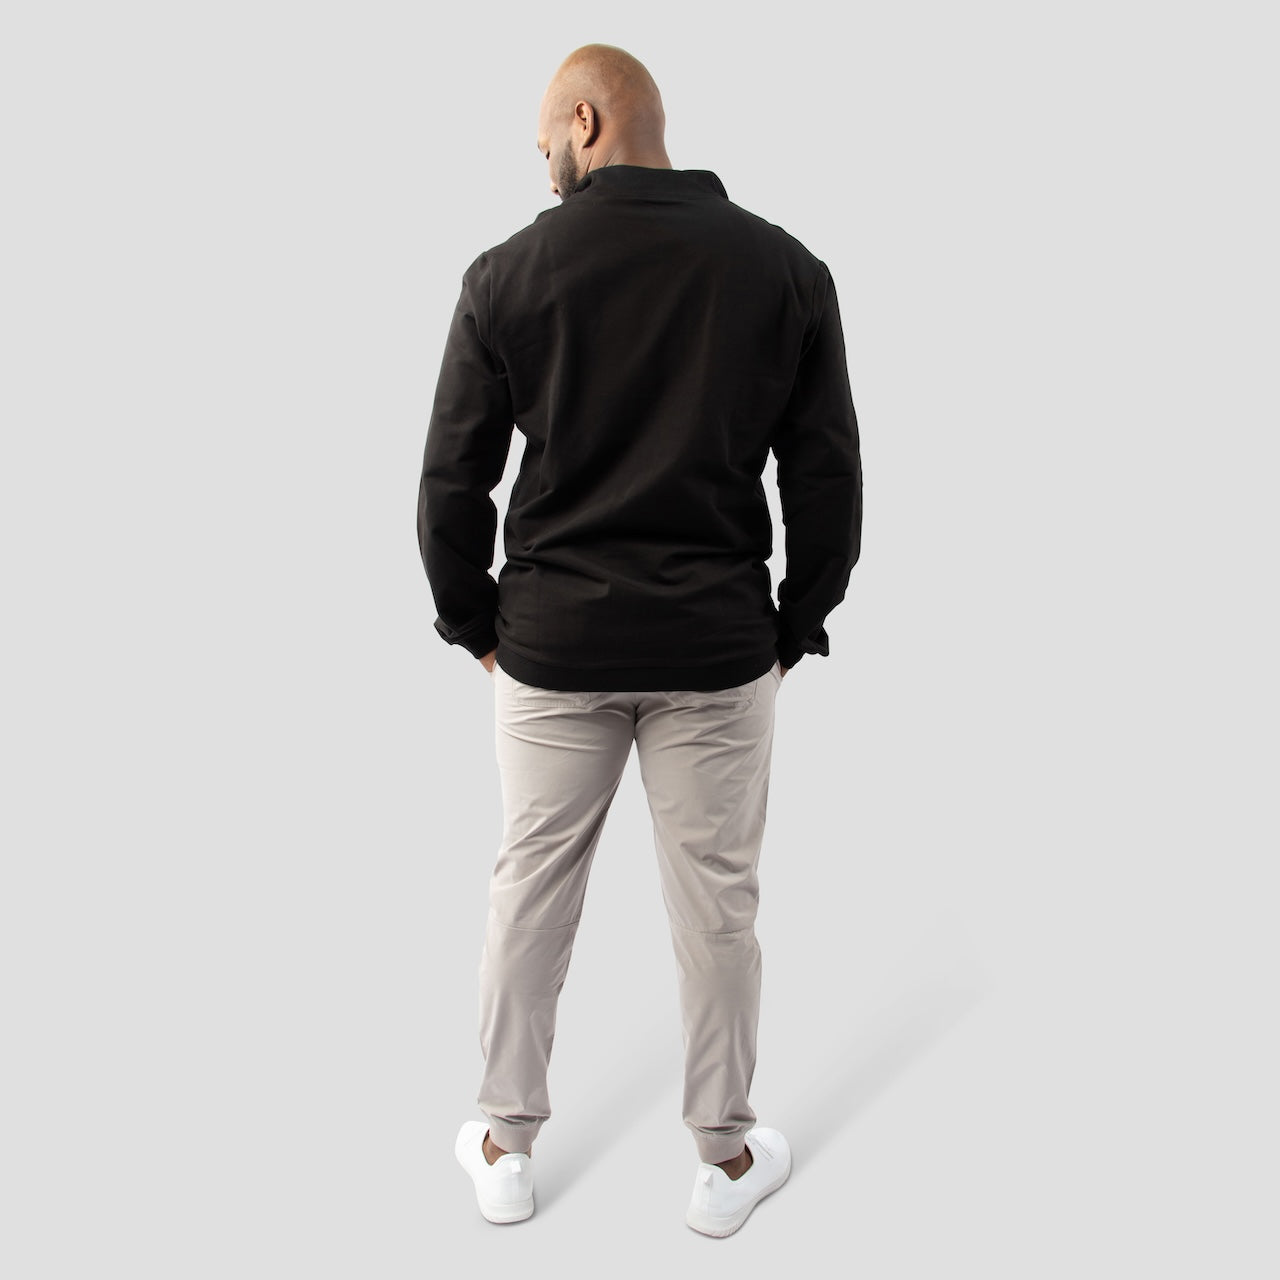 Black Quarter Zip Jacket for Tall Slim Men